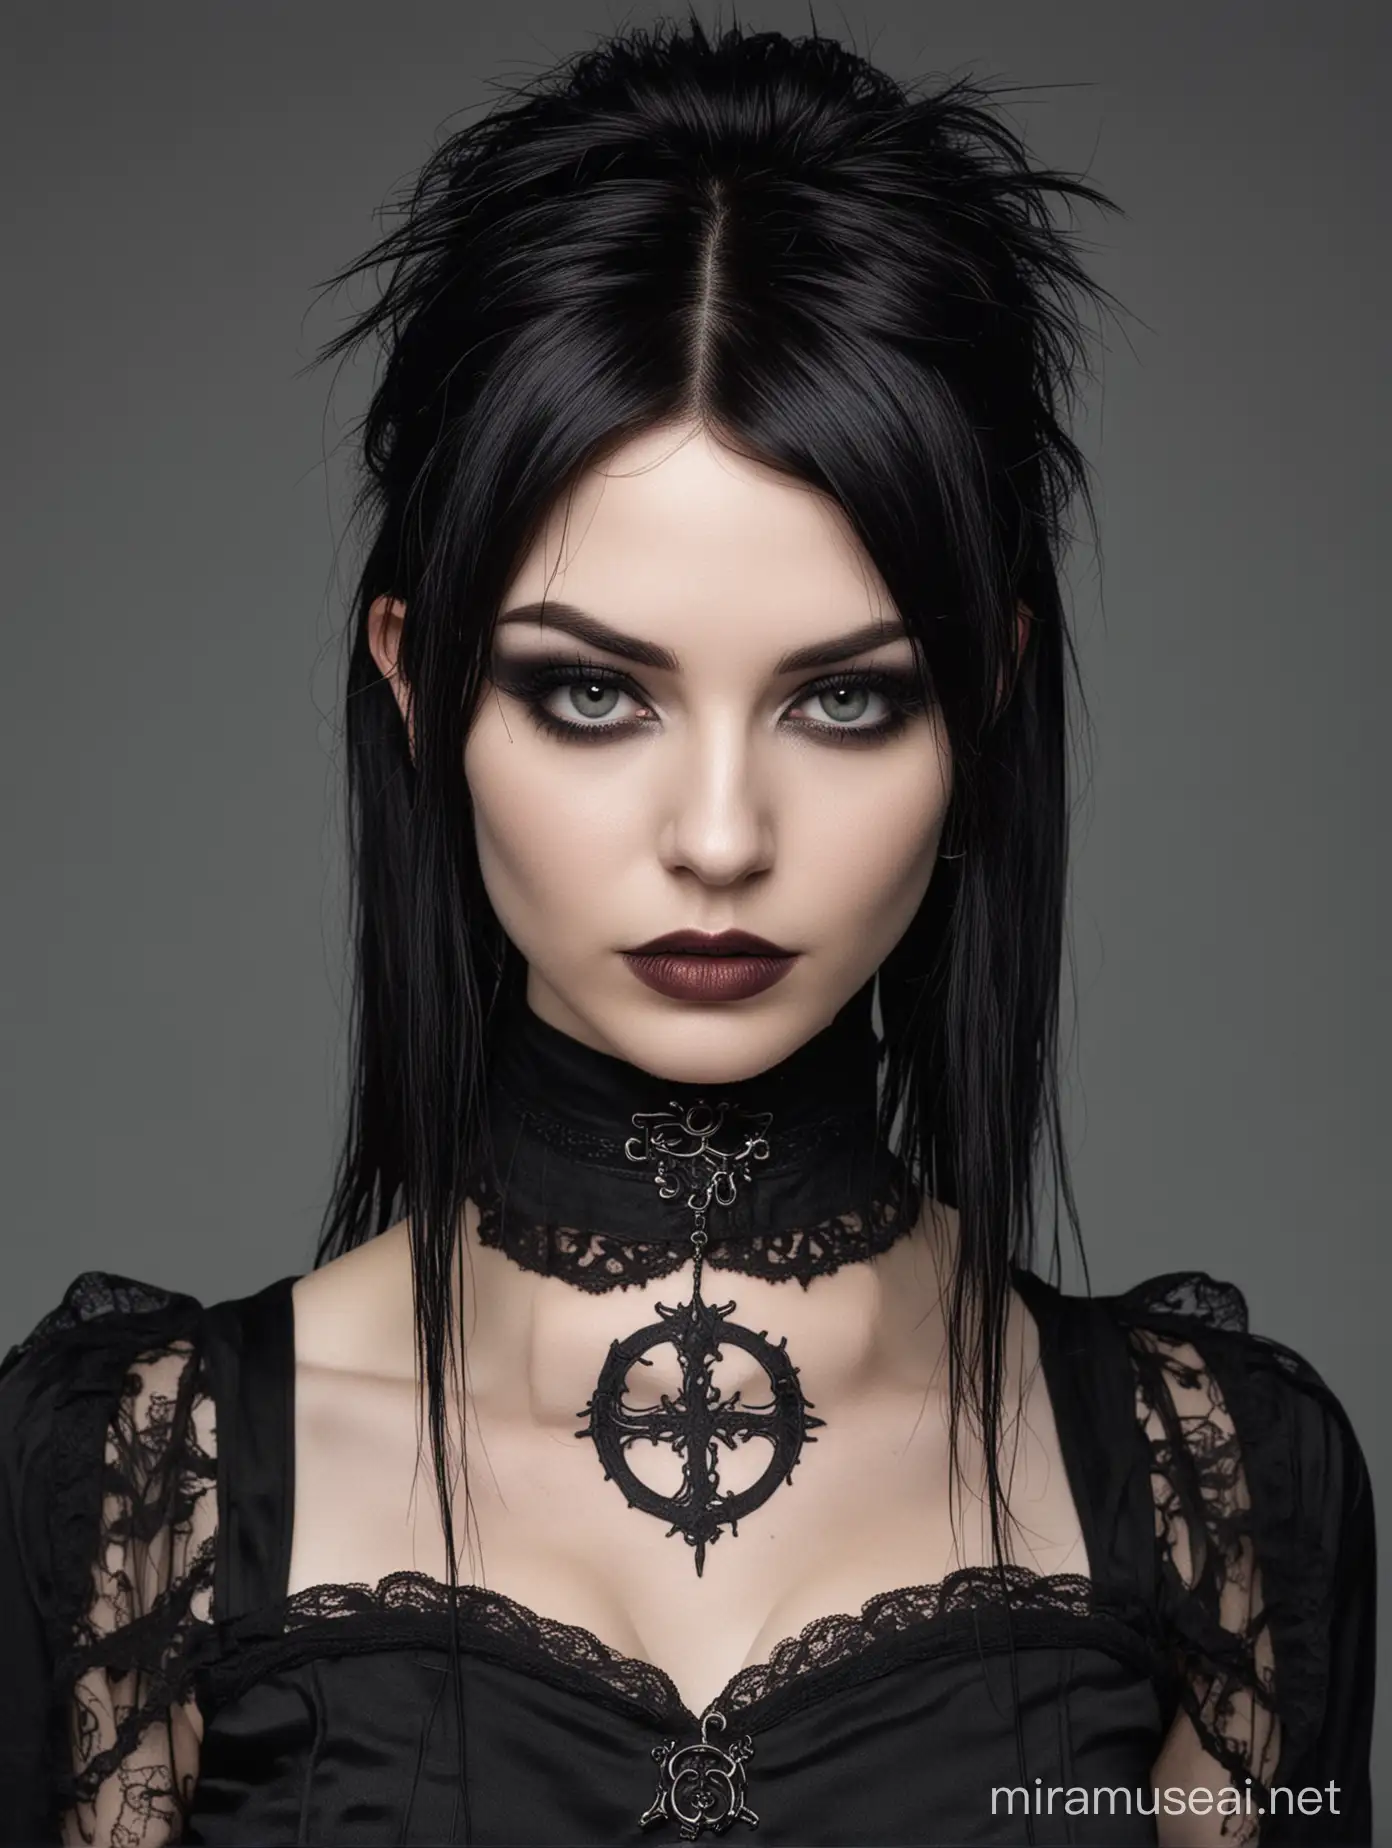 Elegant Gothic Fashion with Dark Atmosphere